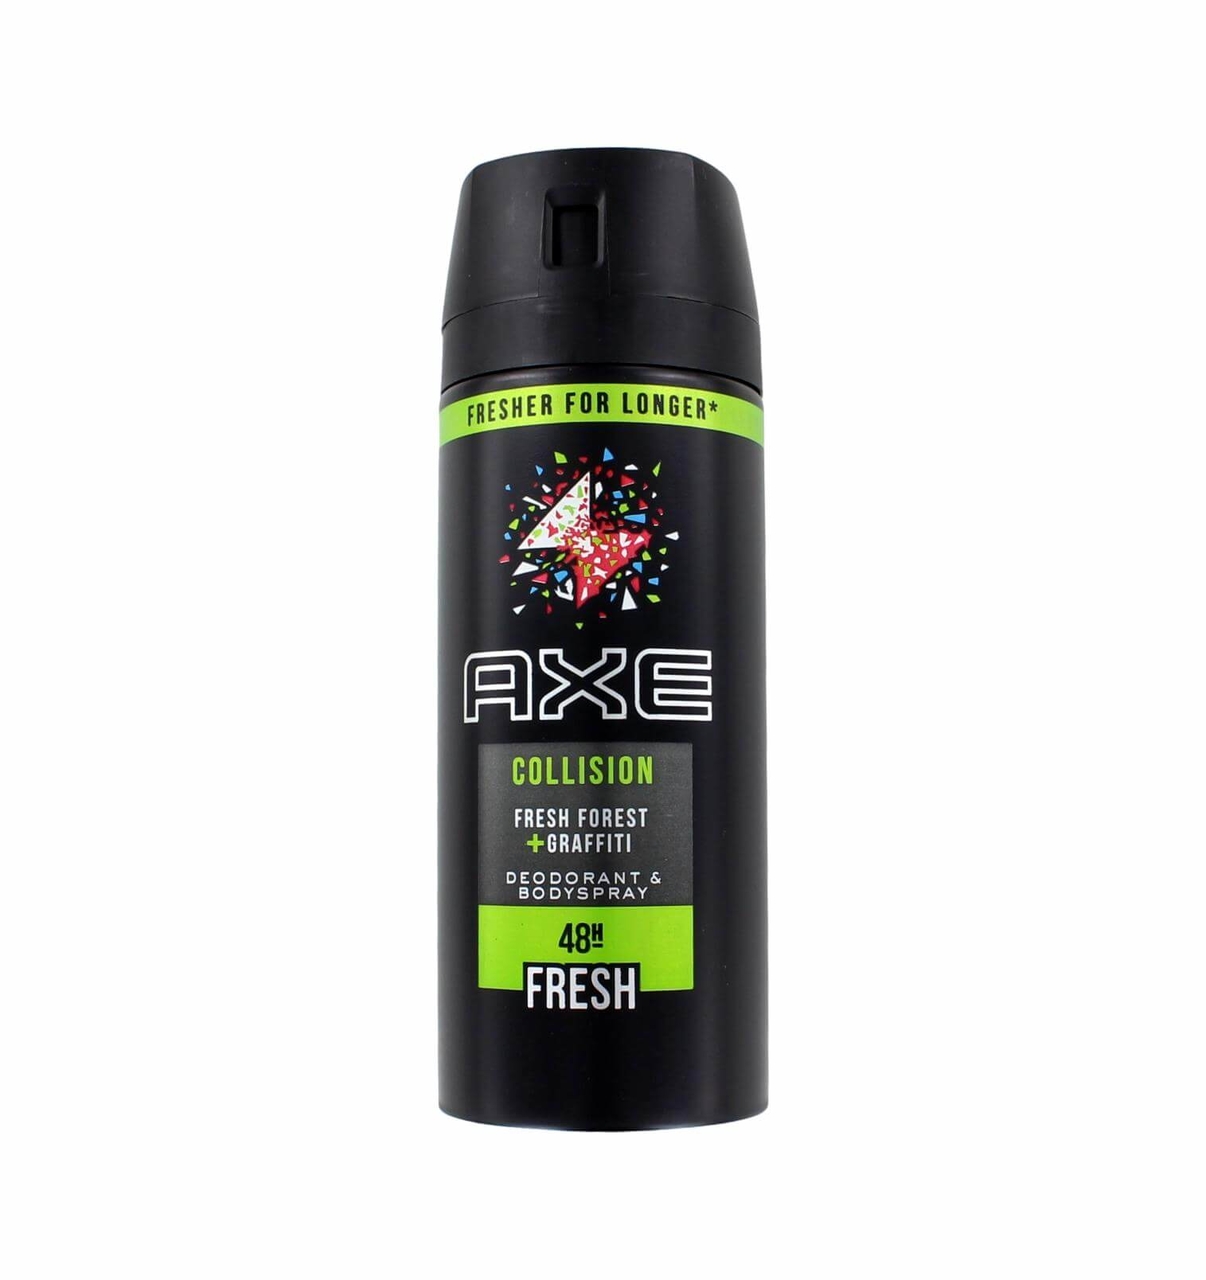 Laboratorium Erfenis Gebeurt Axe Collision 48h Fresh - Deodorant & body Spray - fresh forest & graffiti  150ml - 24winkelen